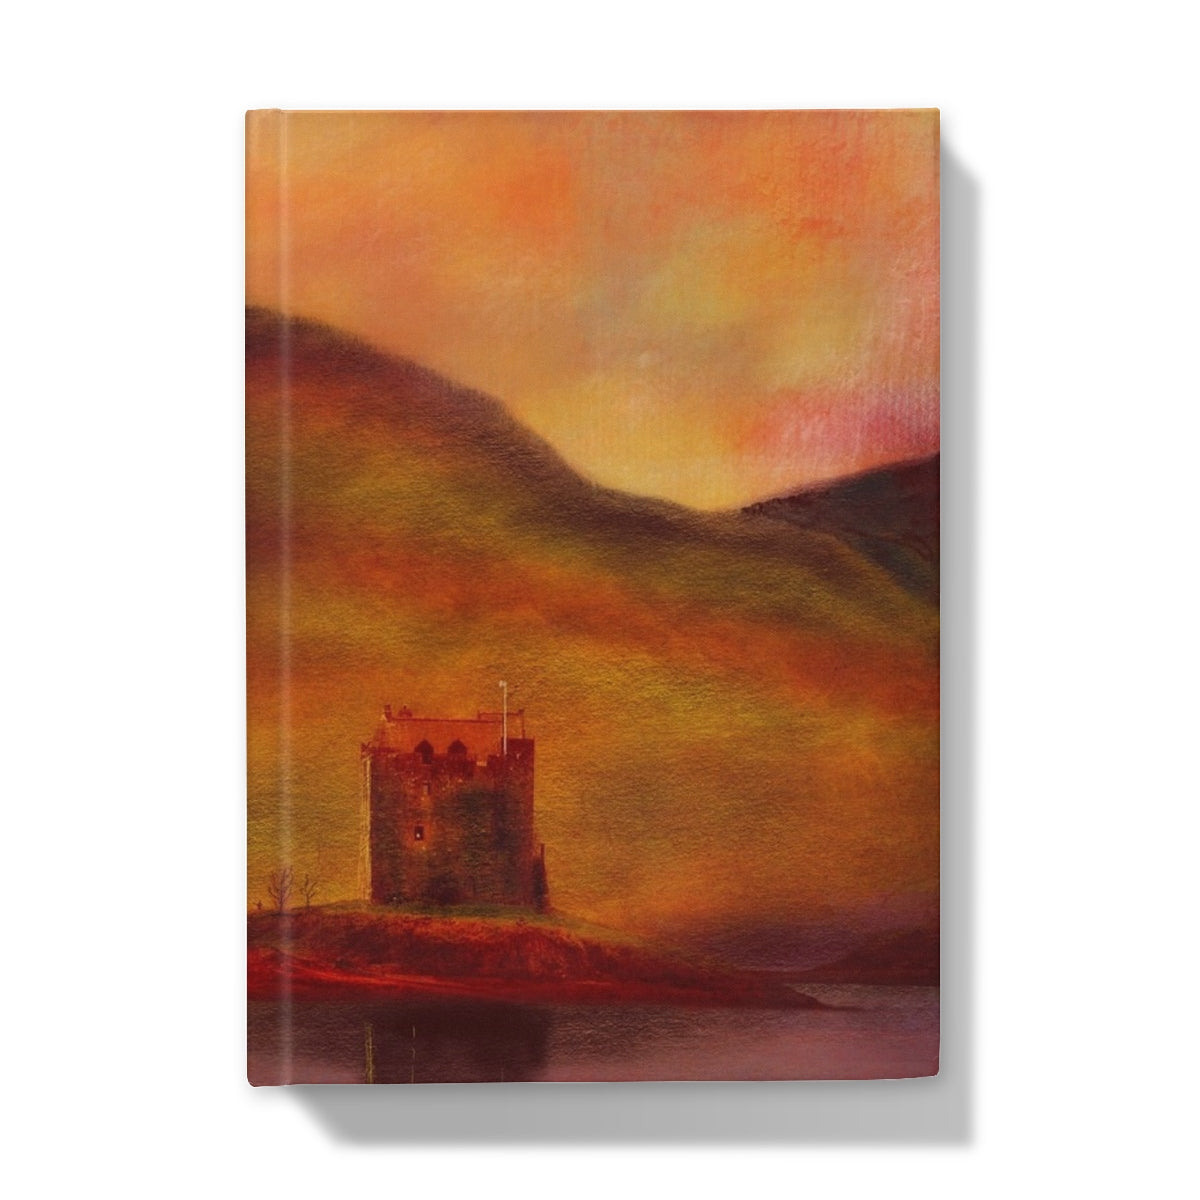 Castle Stalker Sunset Art Gifts Hardback Journal-Journals & Notebooks-Historic & Iconic Scotland Art Gallery-5"x7"-Plain-Paintings, Prints, Homeware, Art Gifts From Scotland By Scottish Artist Kevin Hunter